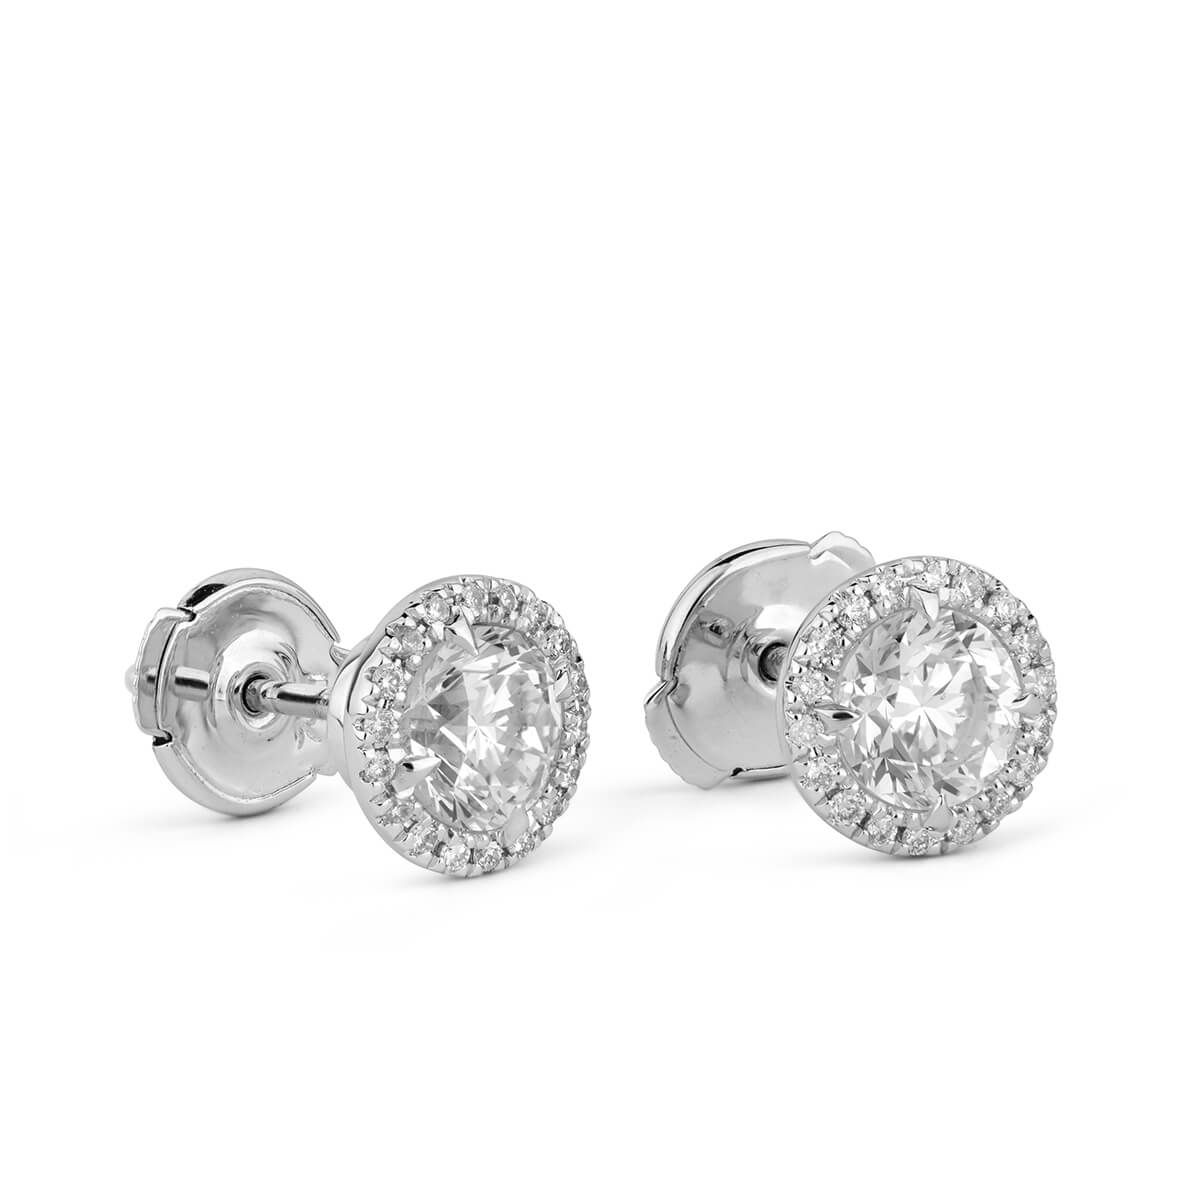  White Diamond Earrings, 1.11 Ct. TW, Round shape